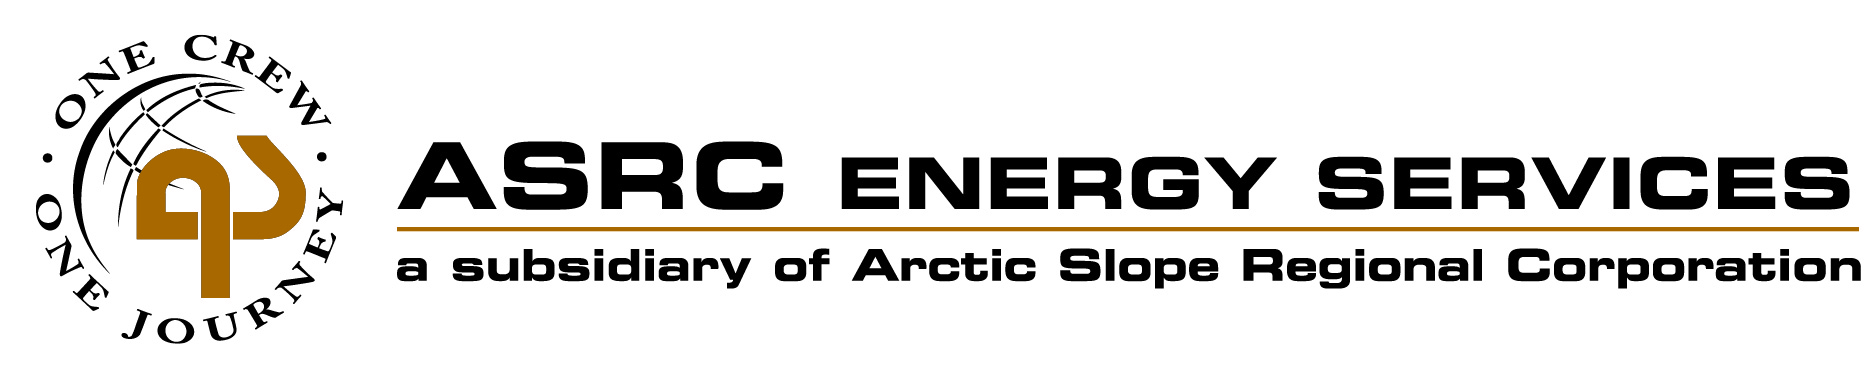 ASRC Energy Logo.jpg